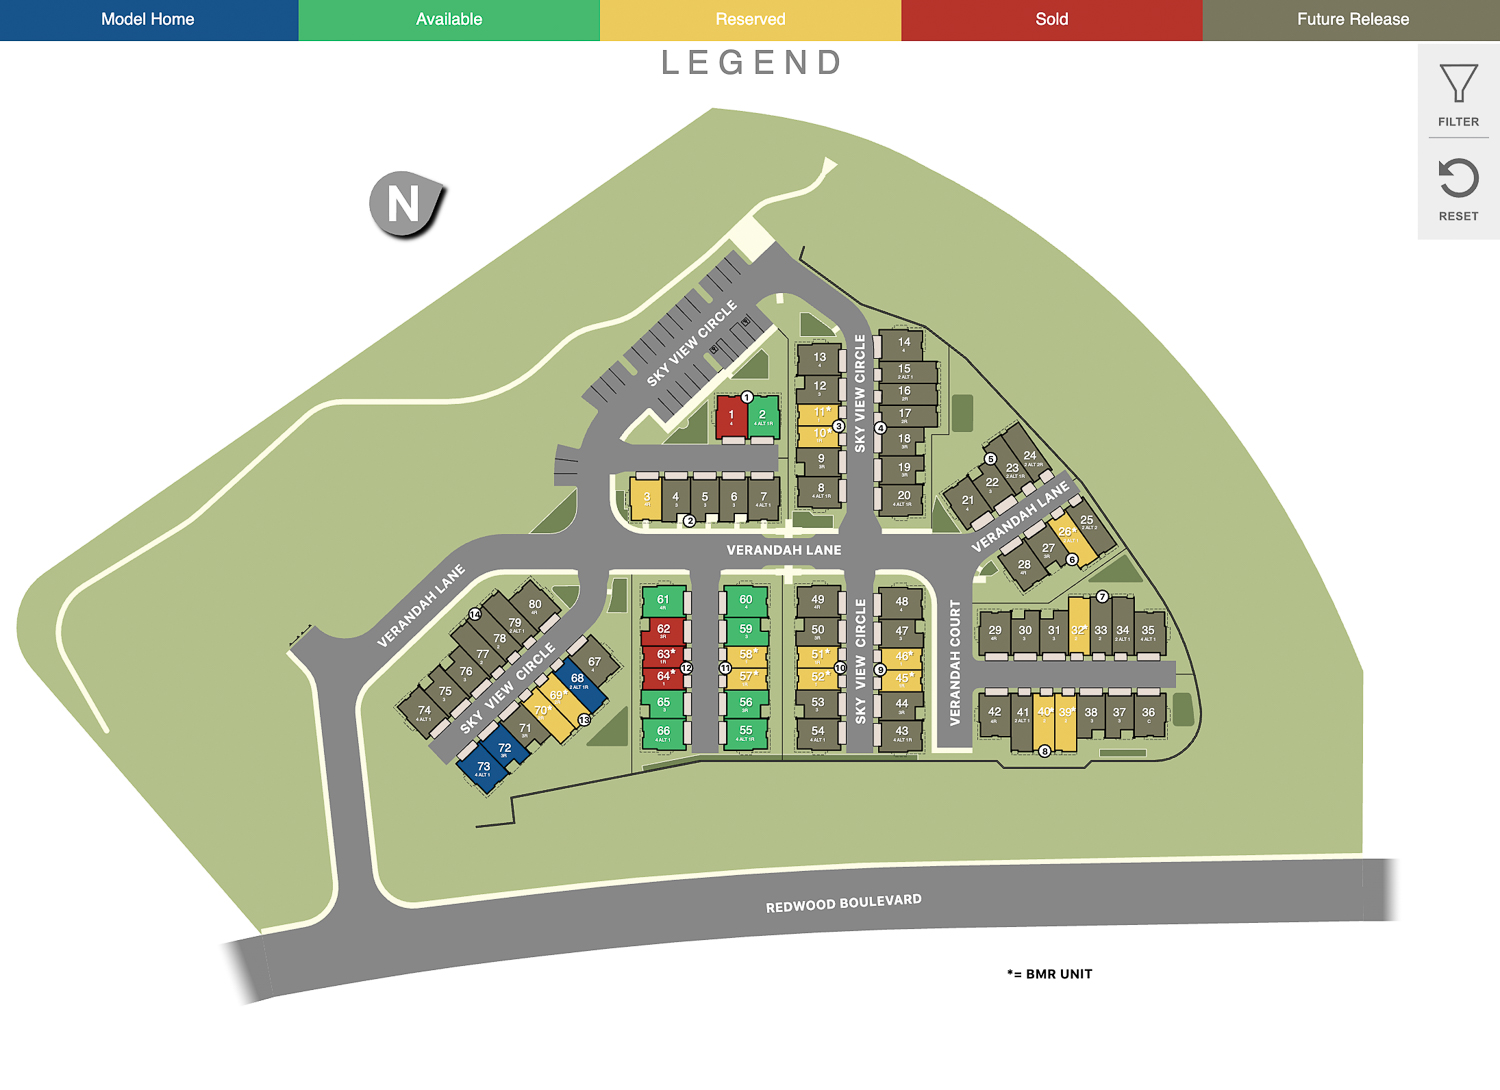 Verandah at Valley Oaks map, legend courtesy Landsea Homes